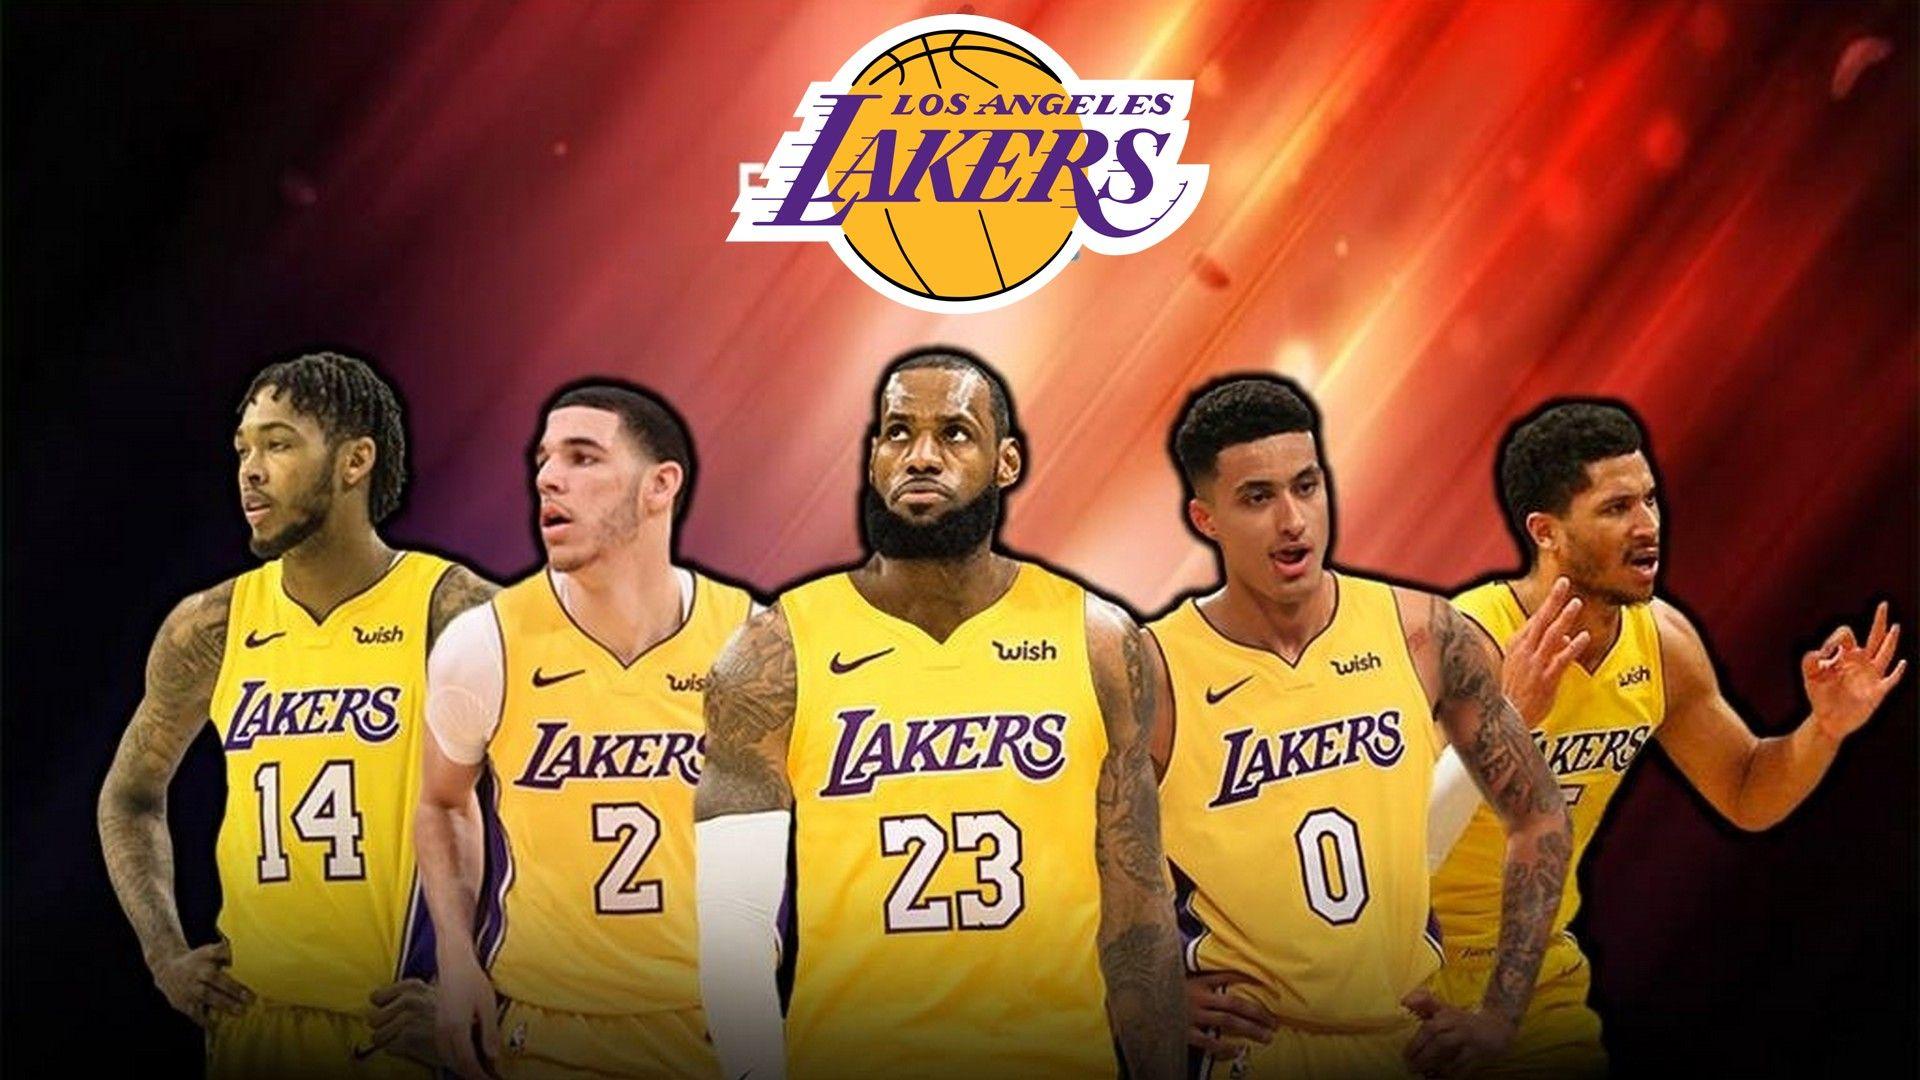 Lakers 2020 Wallpapers - Wallpaper Cave